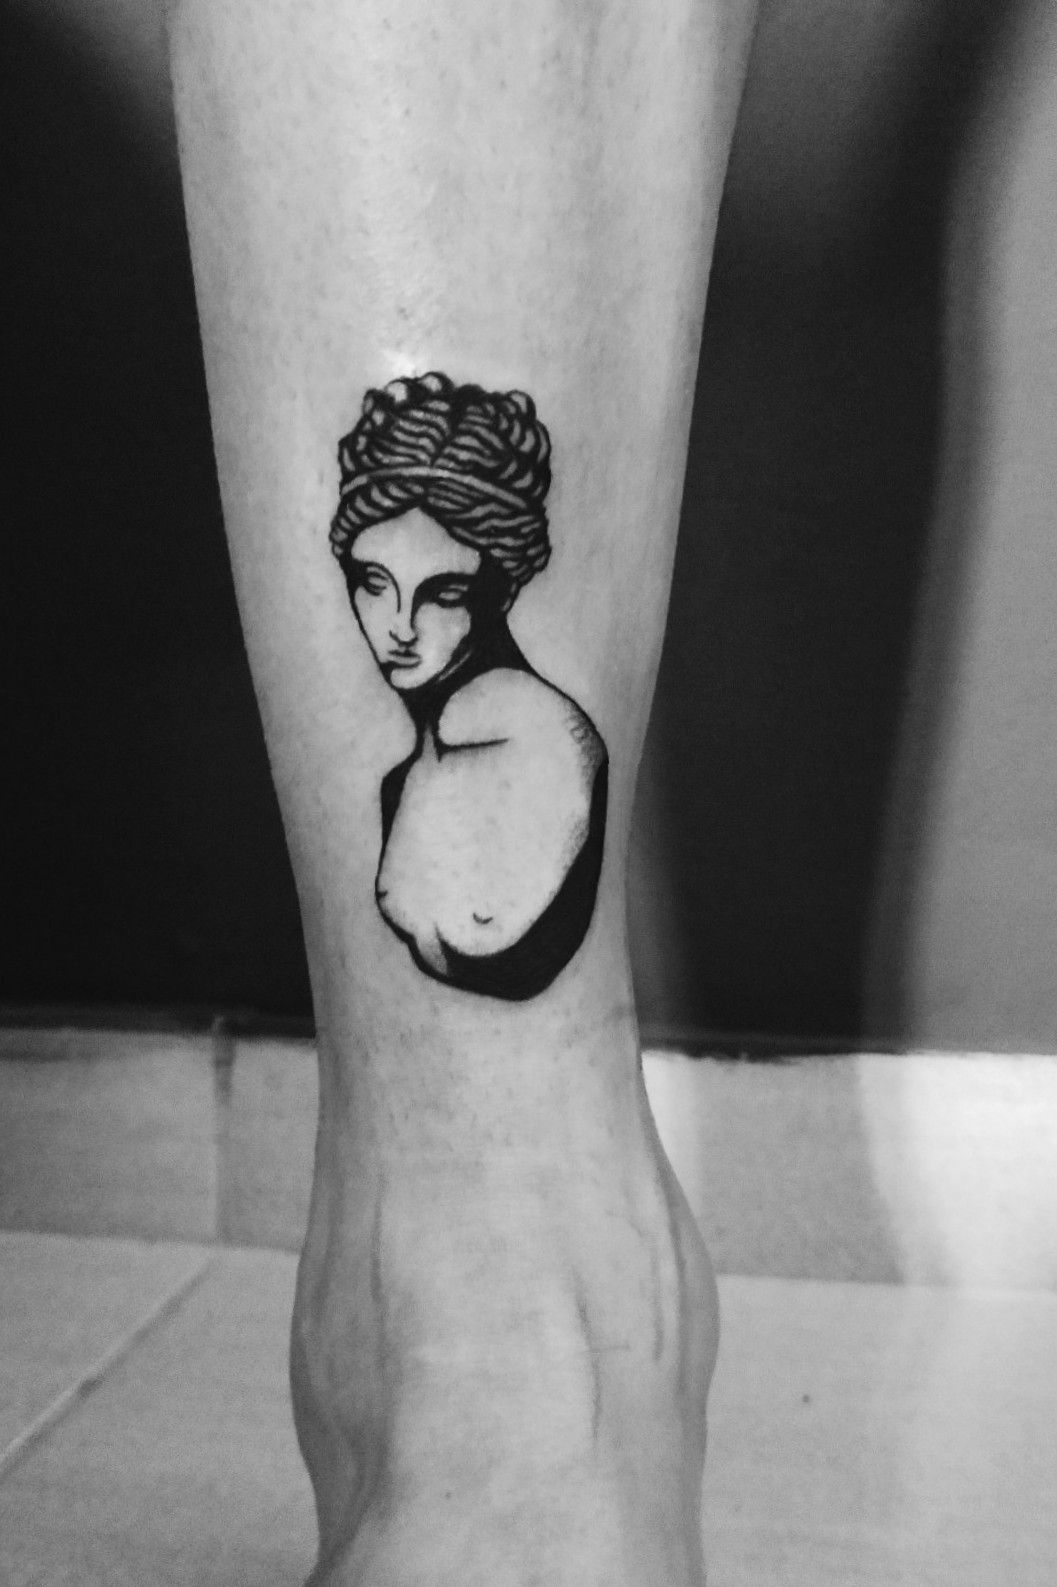 Minimalistic tattoo version of The Birth of Venus